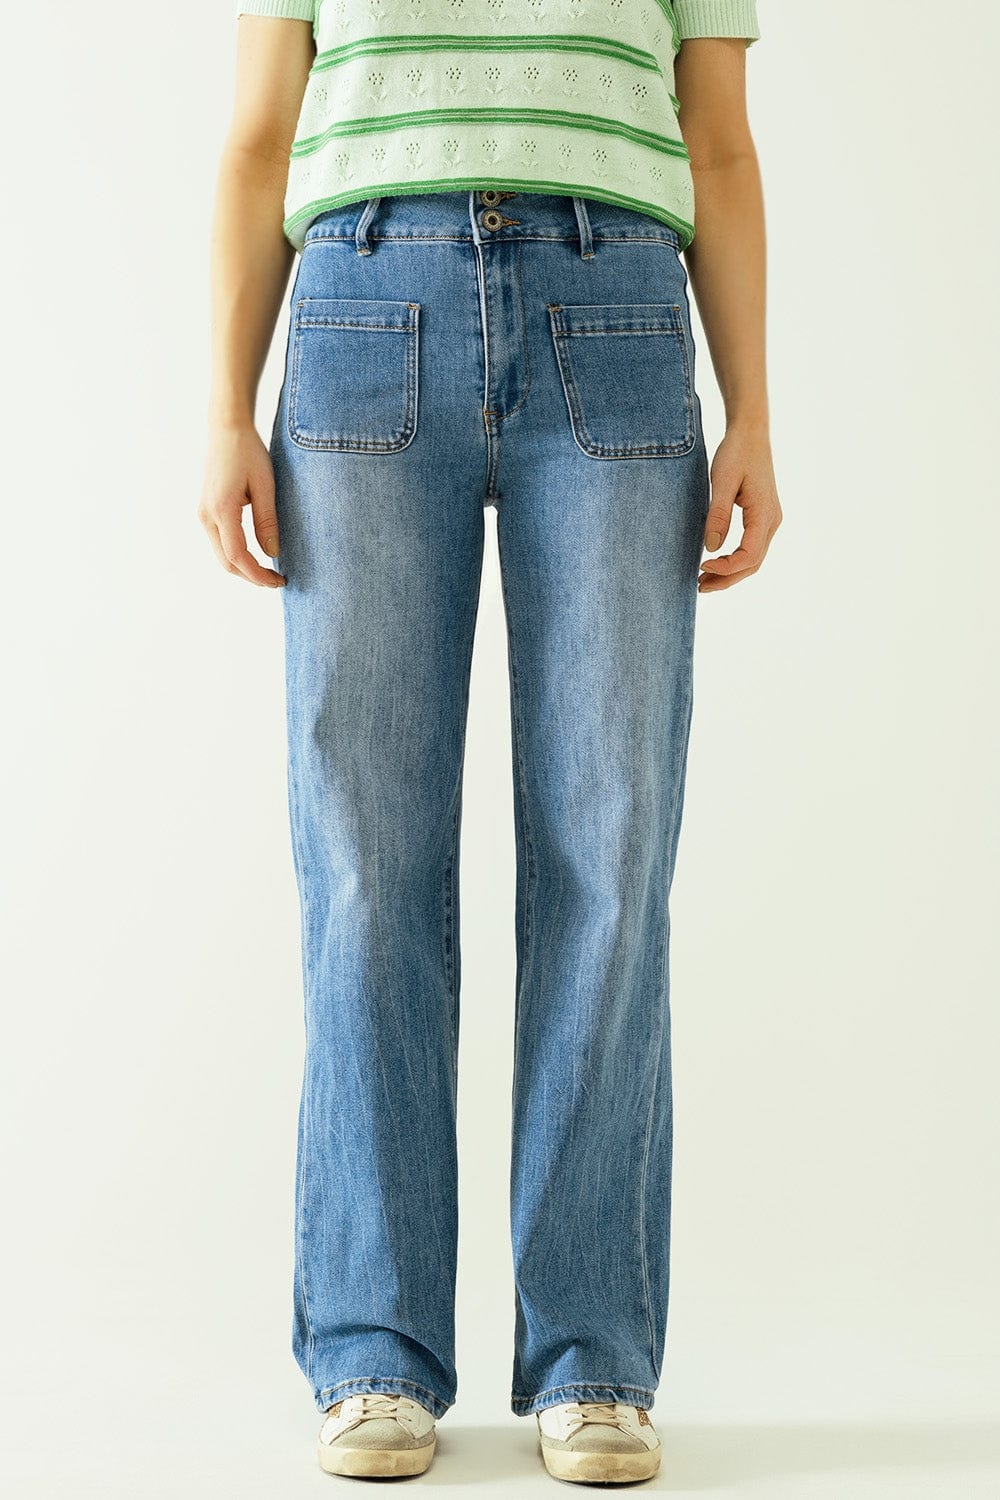 Turn Up Frayed Hem Jeans - Himelhoch's Department Store